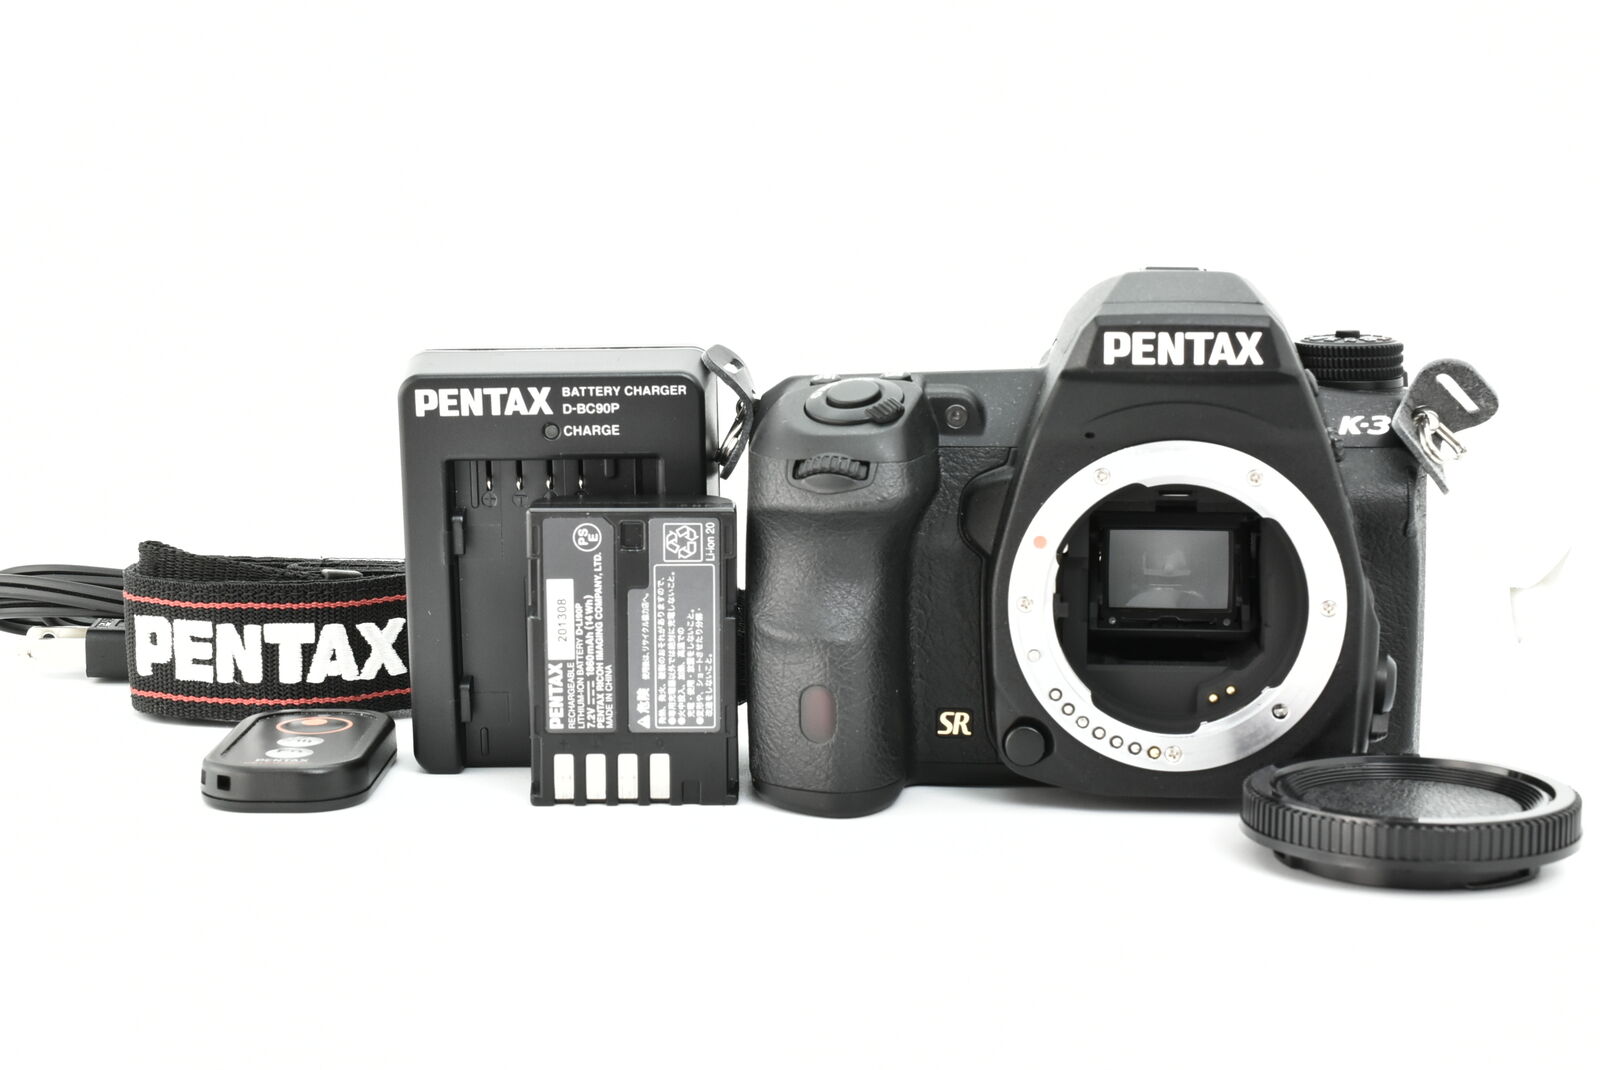 [Near Mint 1492 count] Pentax K-3 24.3 MP Digital SLR Camera Body From Japan